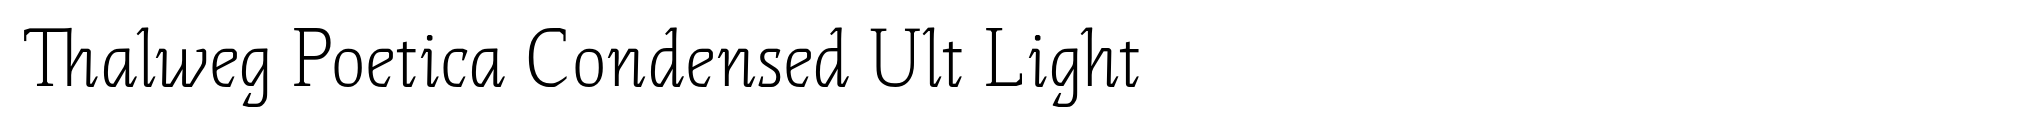 Thalweg Poetica Condensed Ult Light image